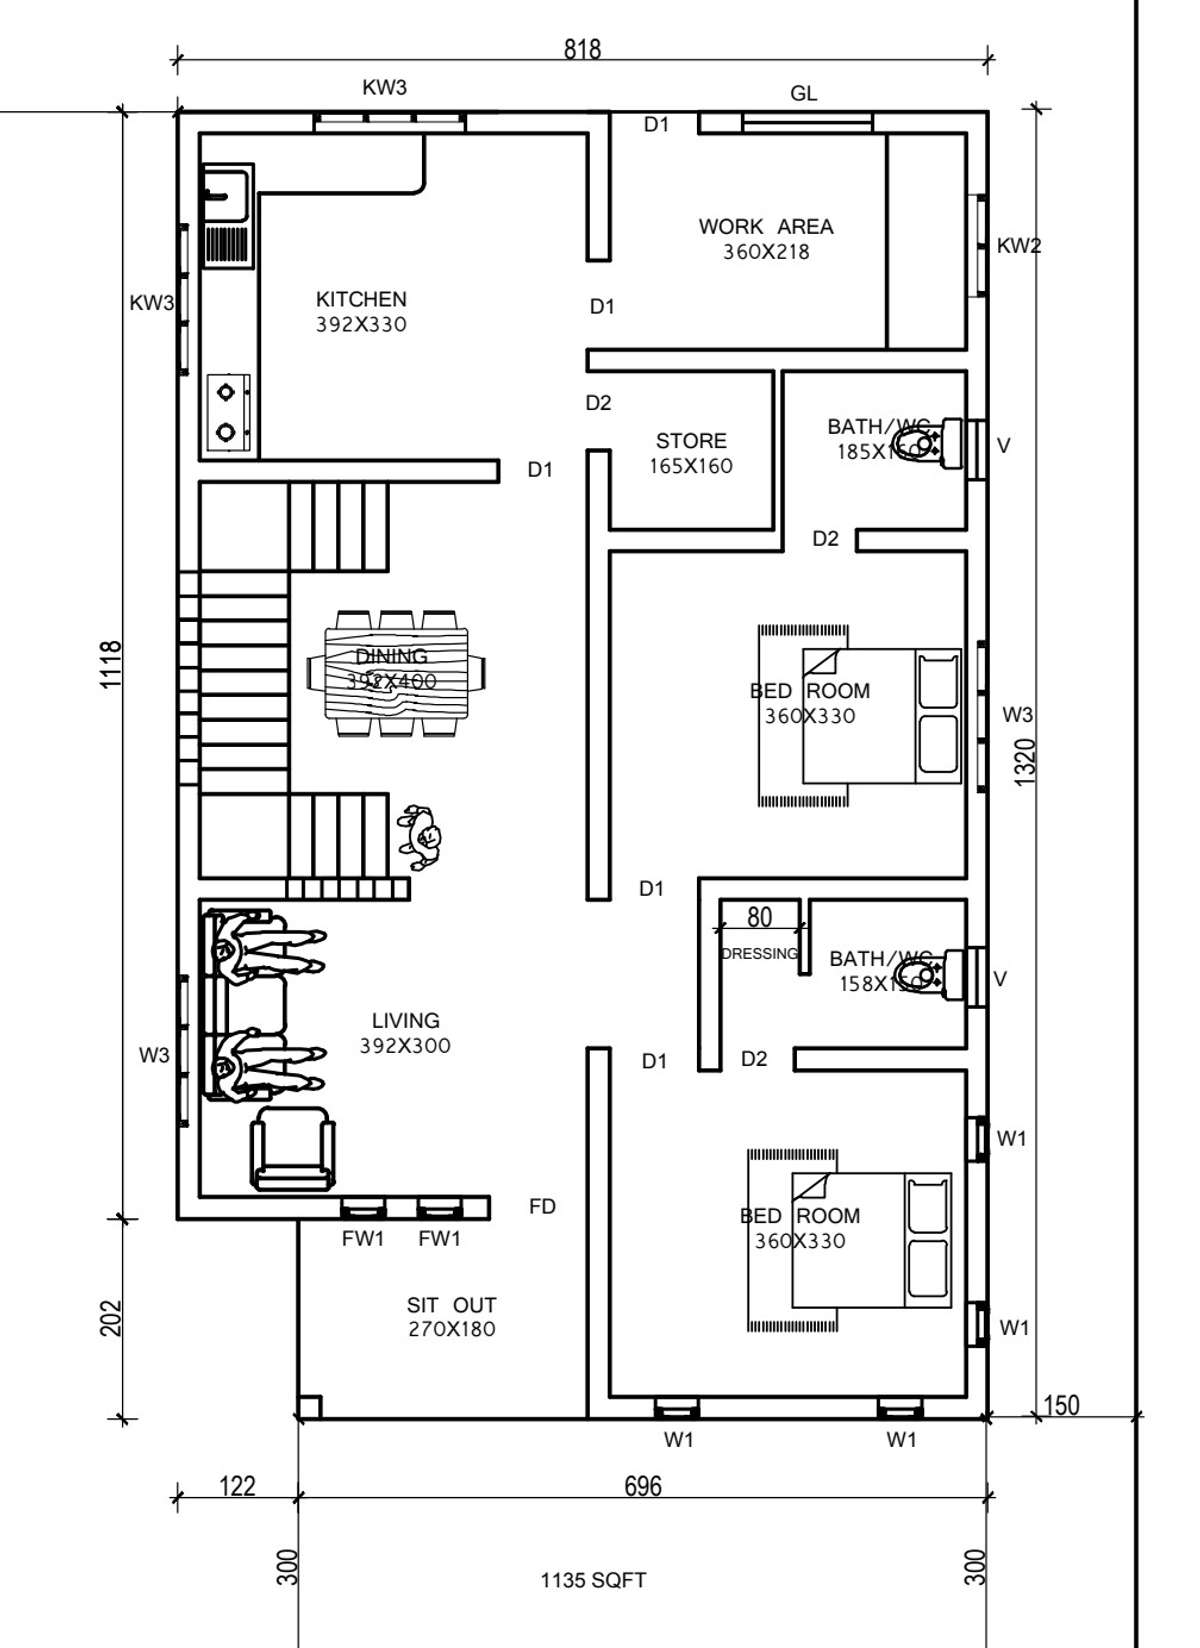 #houseplanning  #floorplan  #groundfloorplan  #architecturedesigns  #CivilEngineer  #contruction  #Contractor  #SUPERVISION  #SmallHouse  #veedupani  
